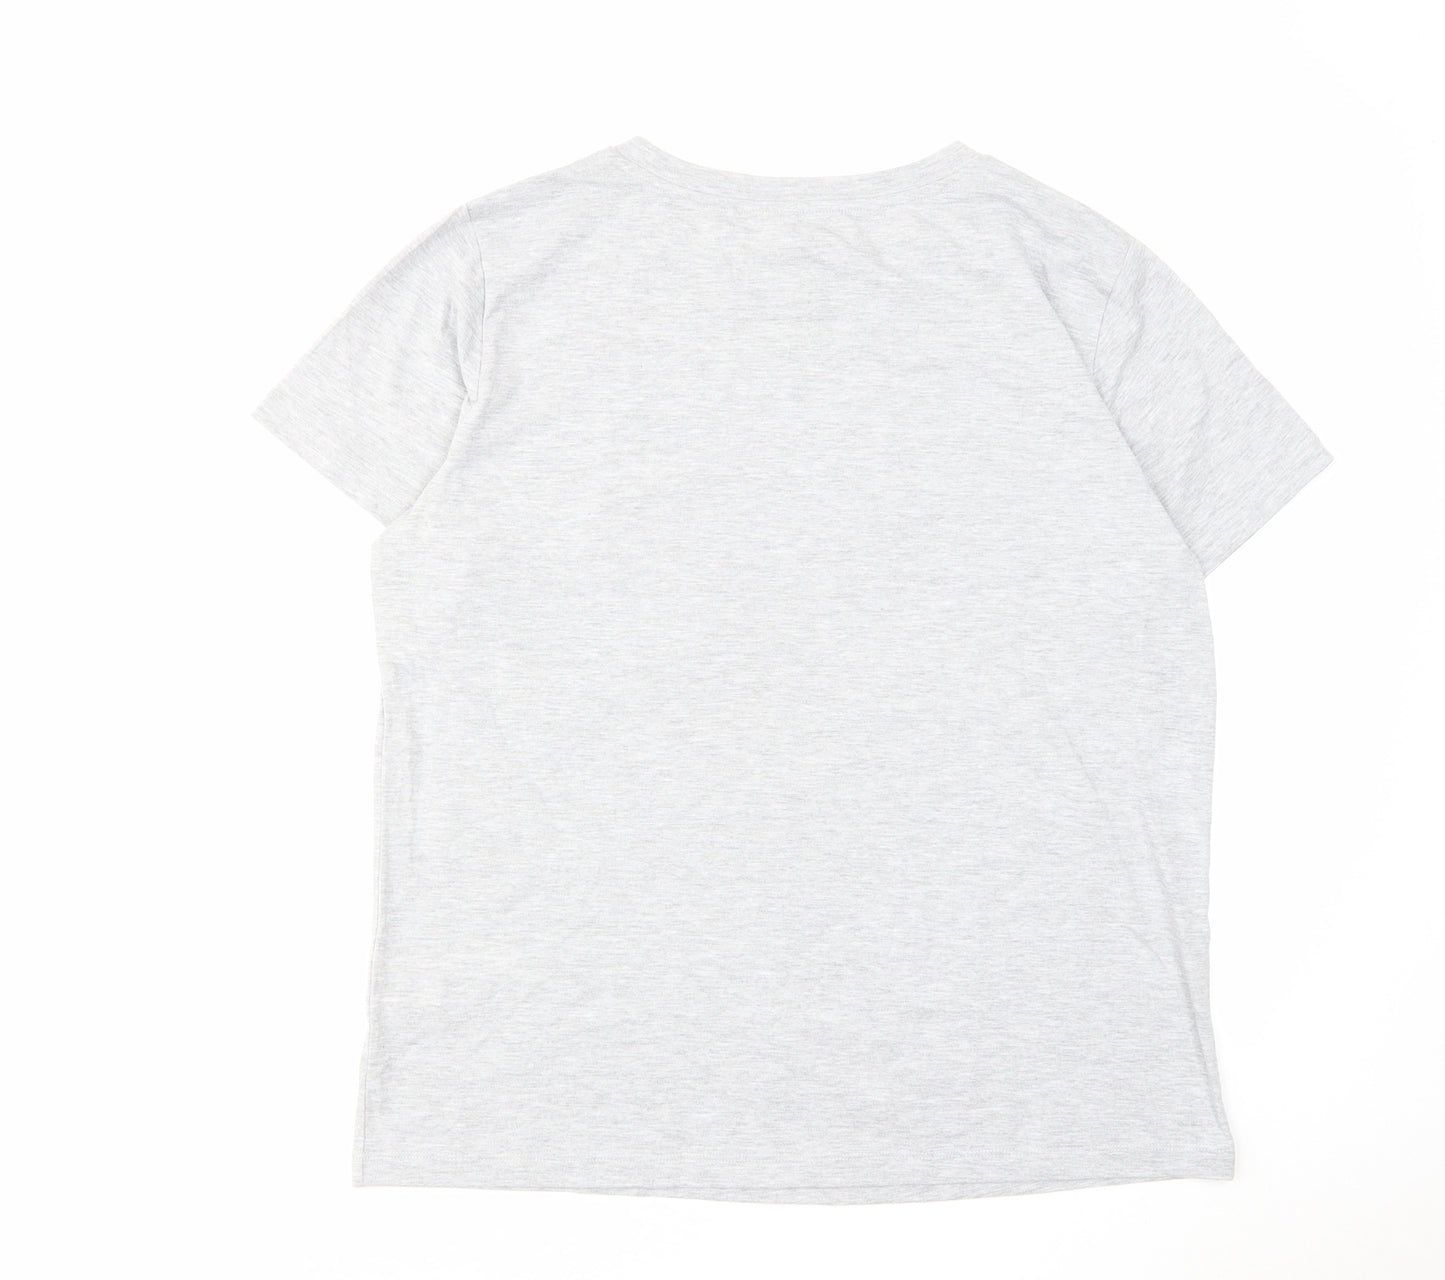 Disney Womens Grey Cotton Basic T-Shirt Size XL Round Neck - Bambi